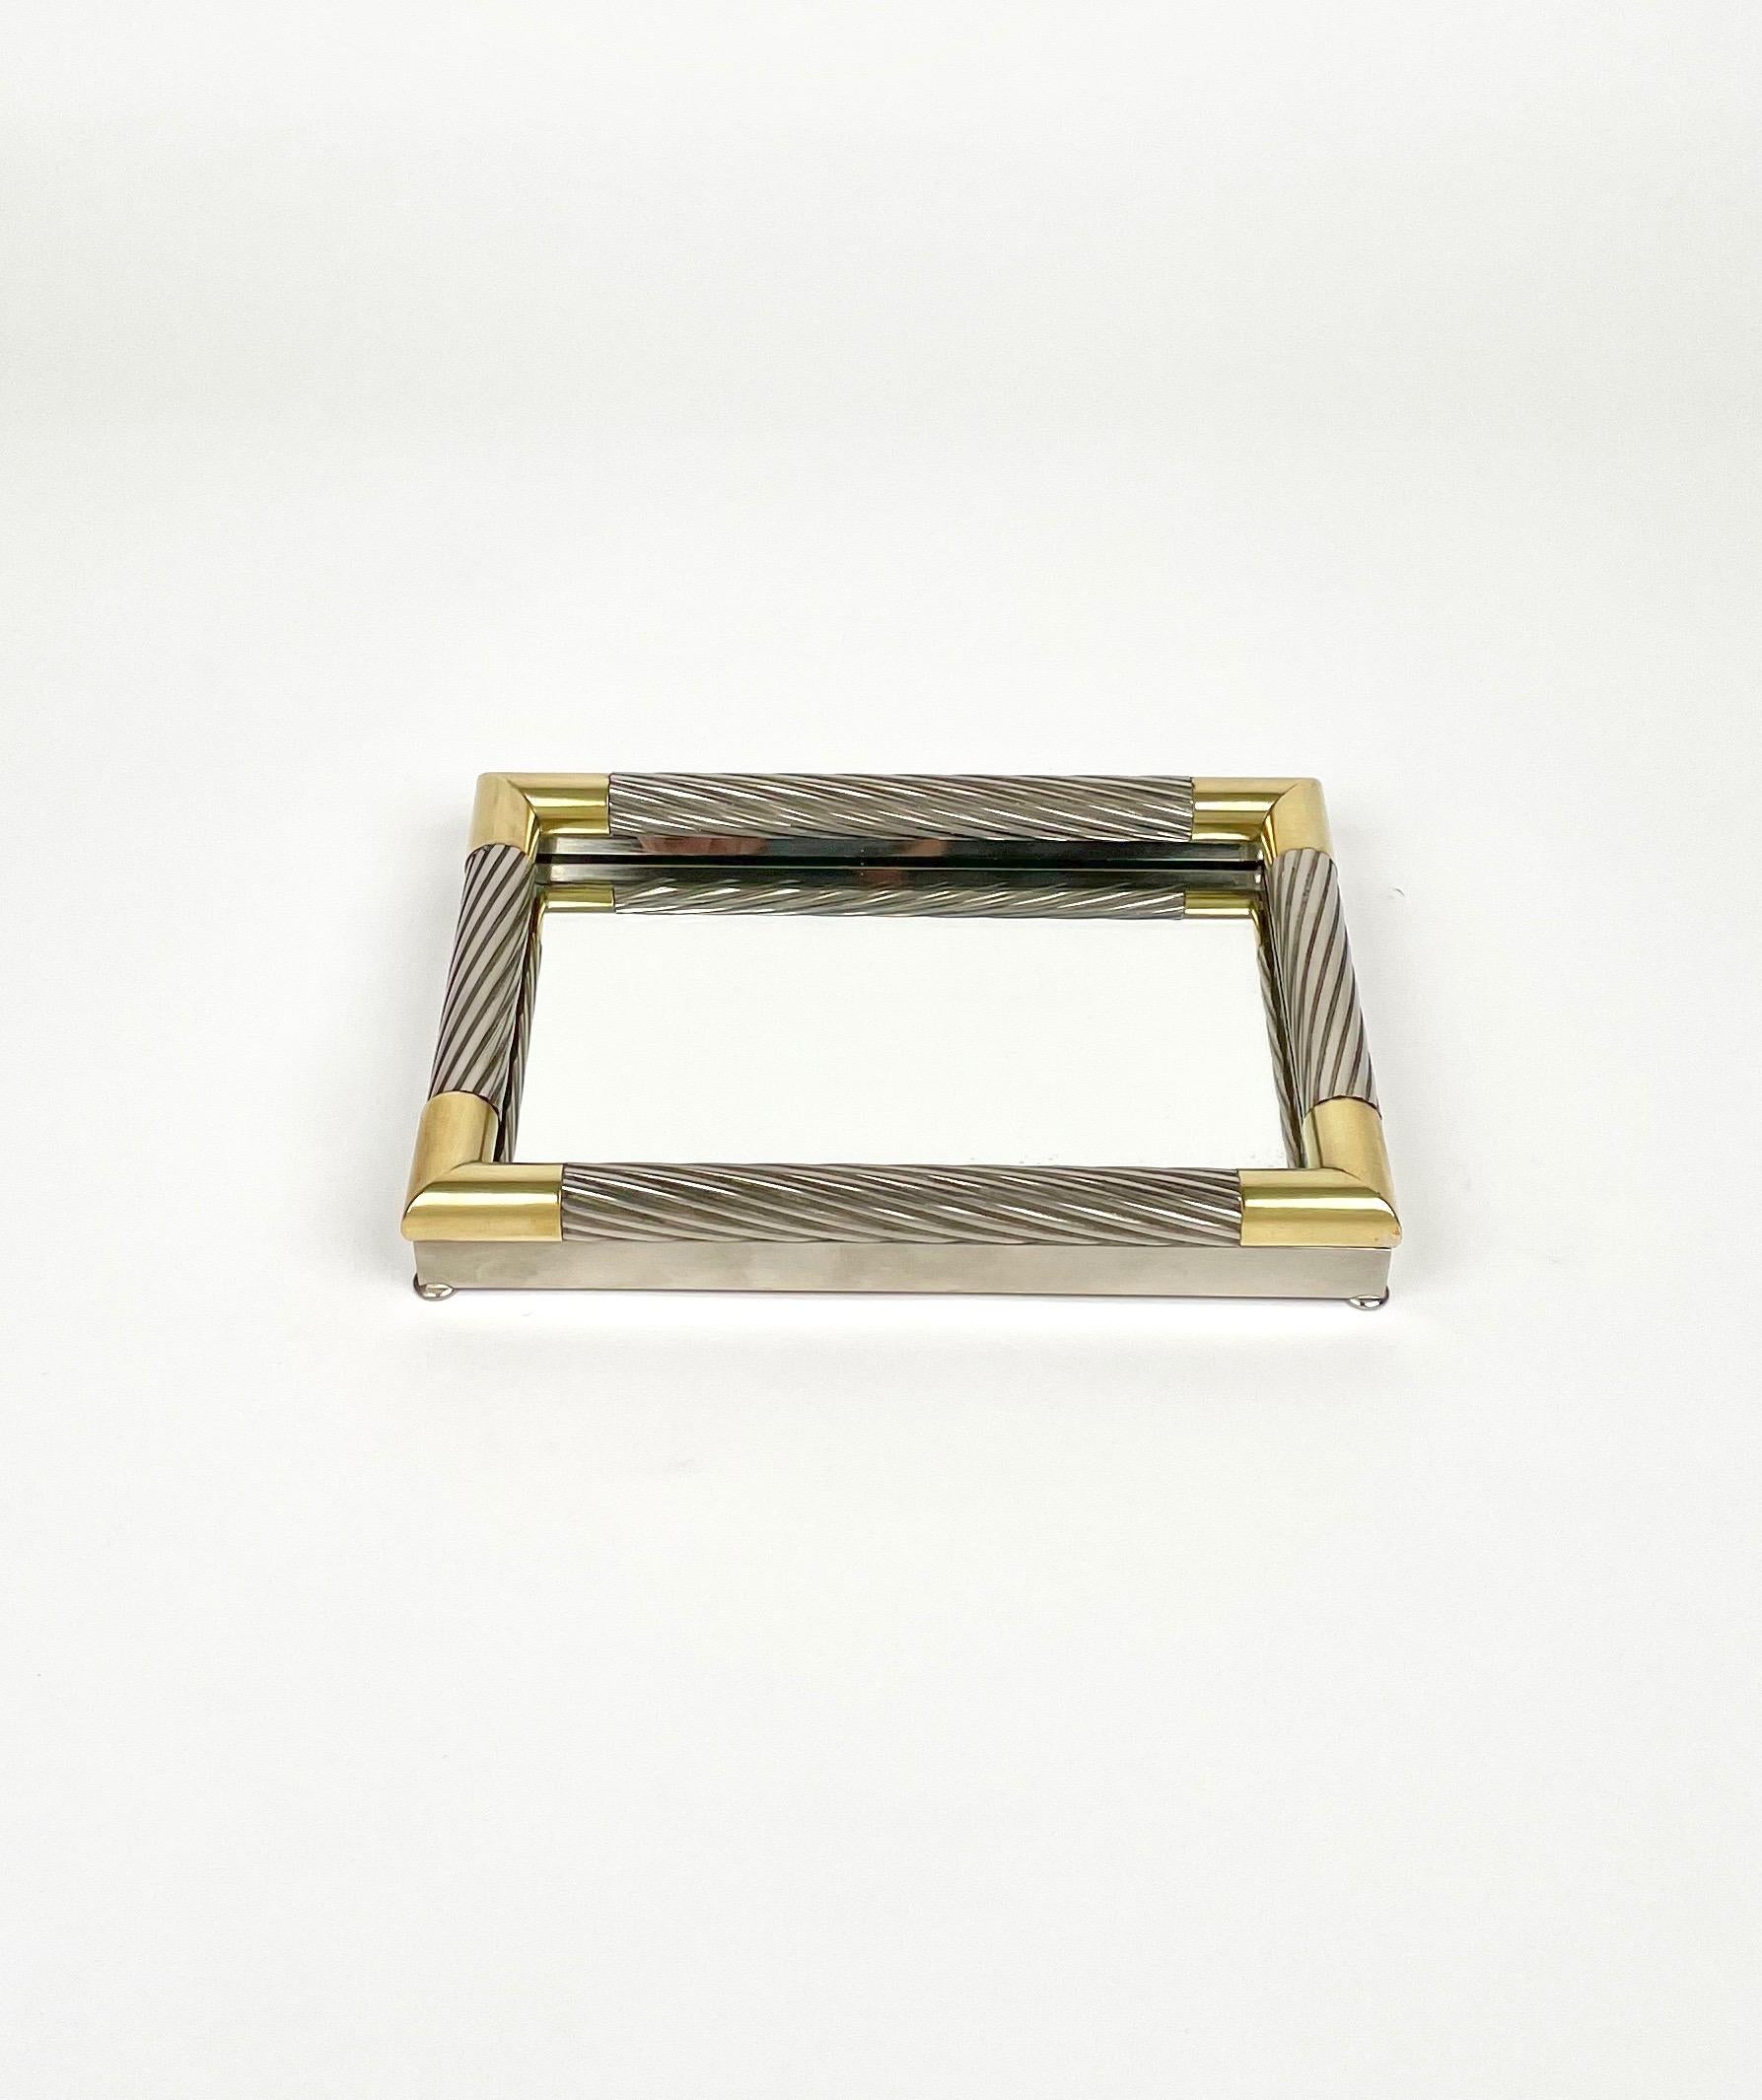 Rectangular Vide-Poche centerpiece in silver metale, mirror e corners brass by the Italian designer Tommaso Barbi. 

Made in Italy in the 1970s.